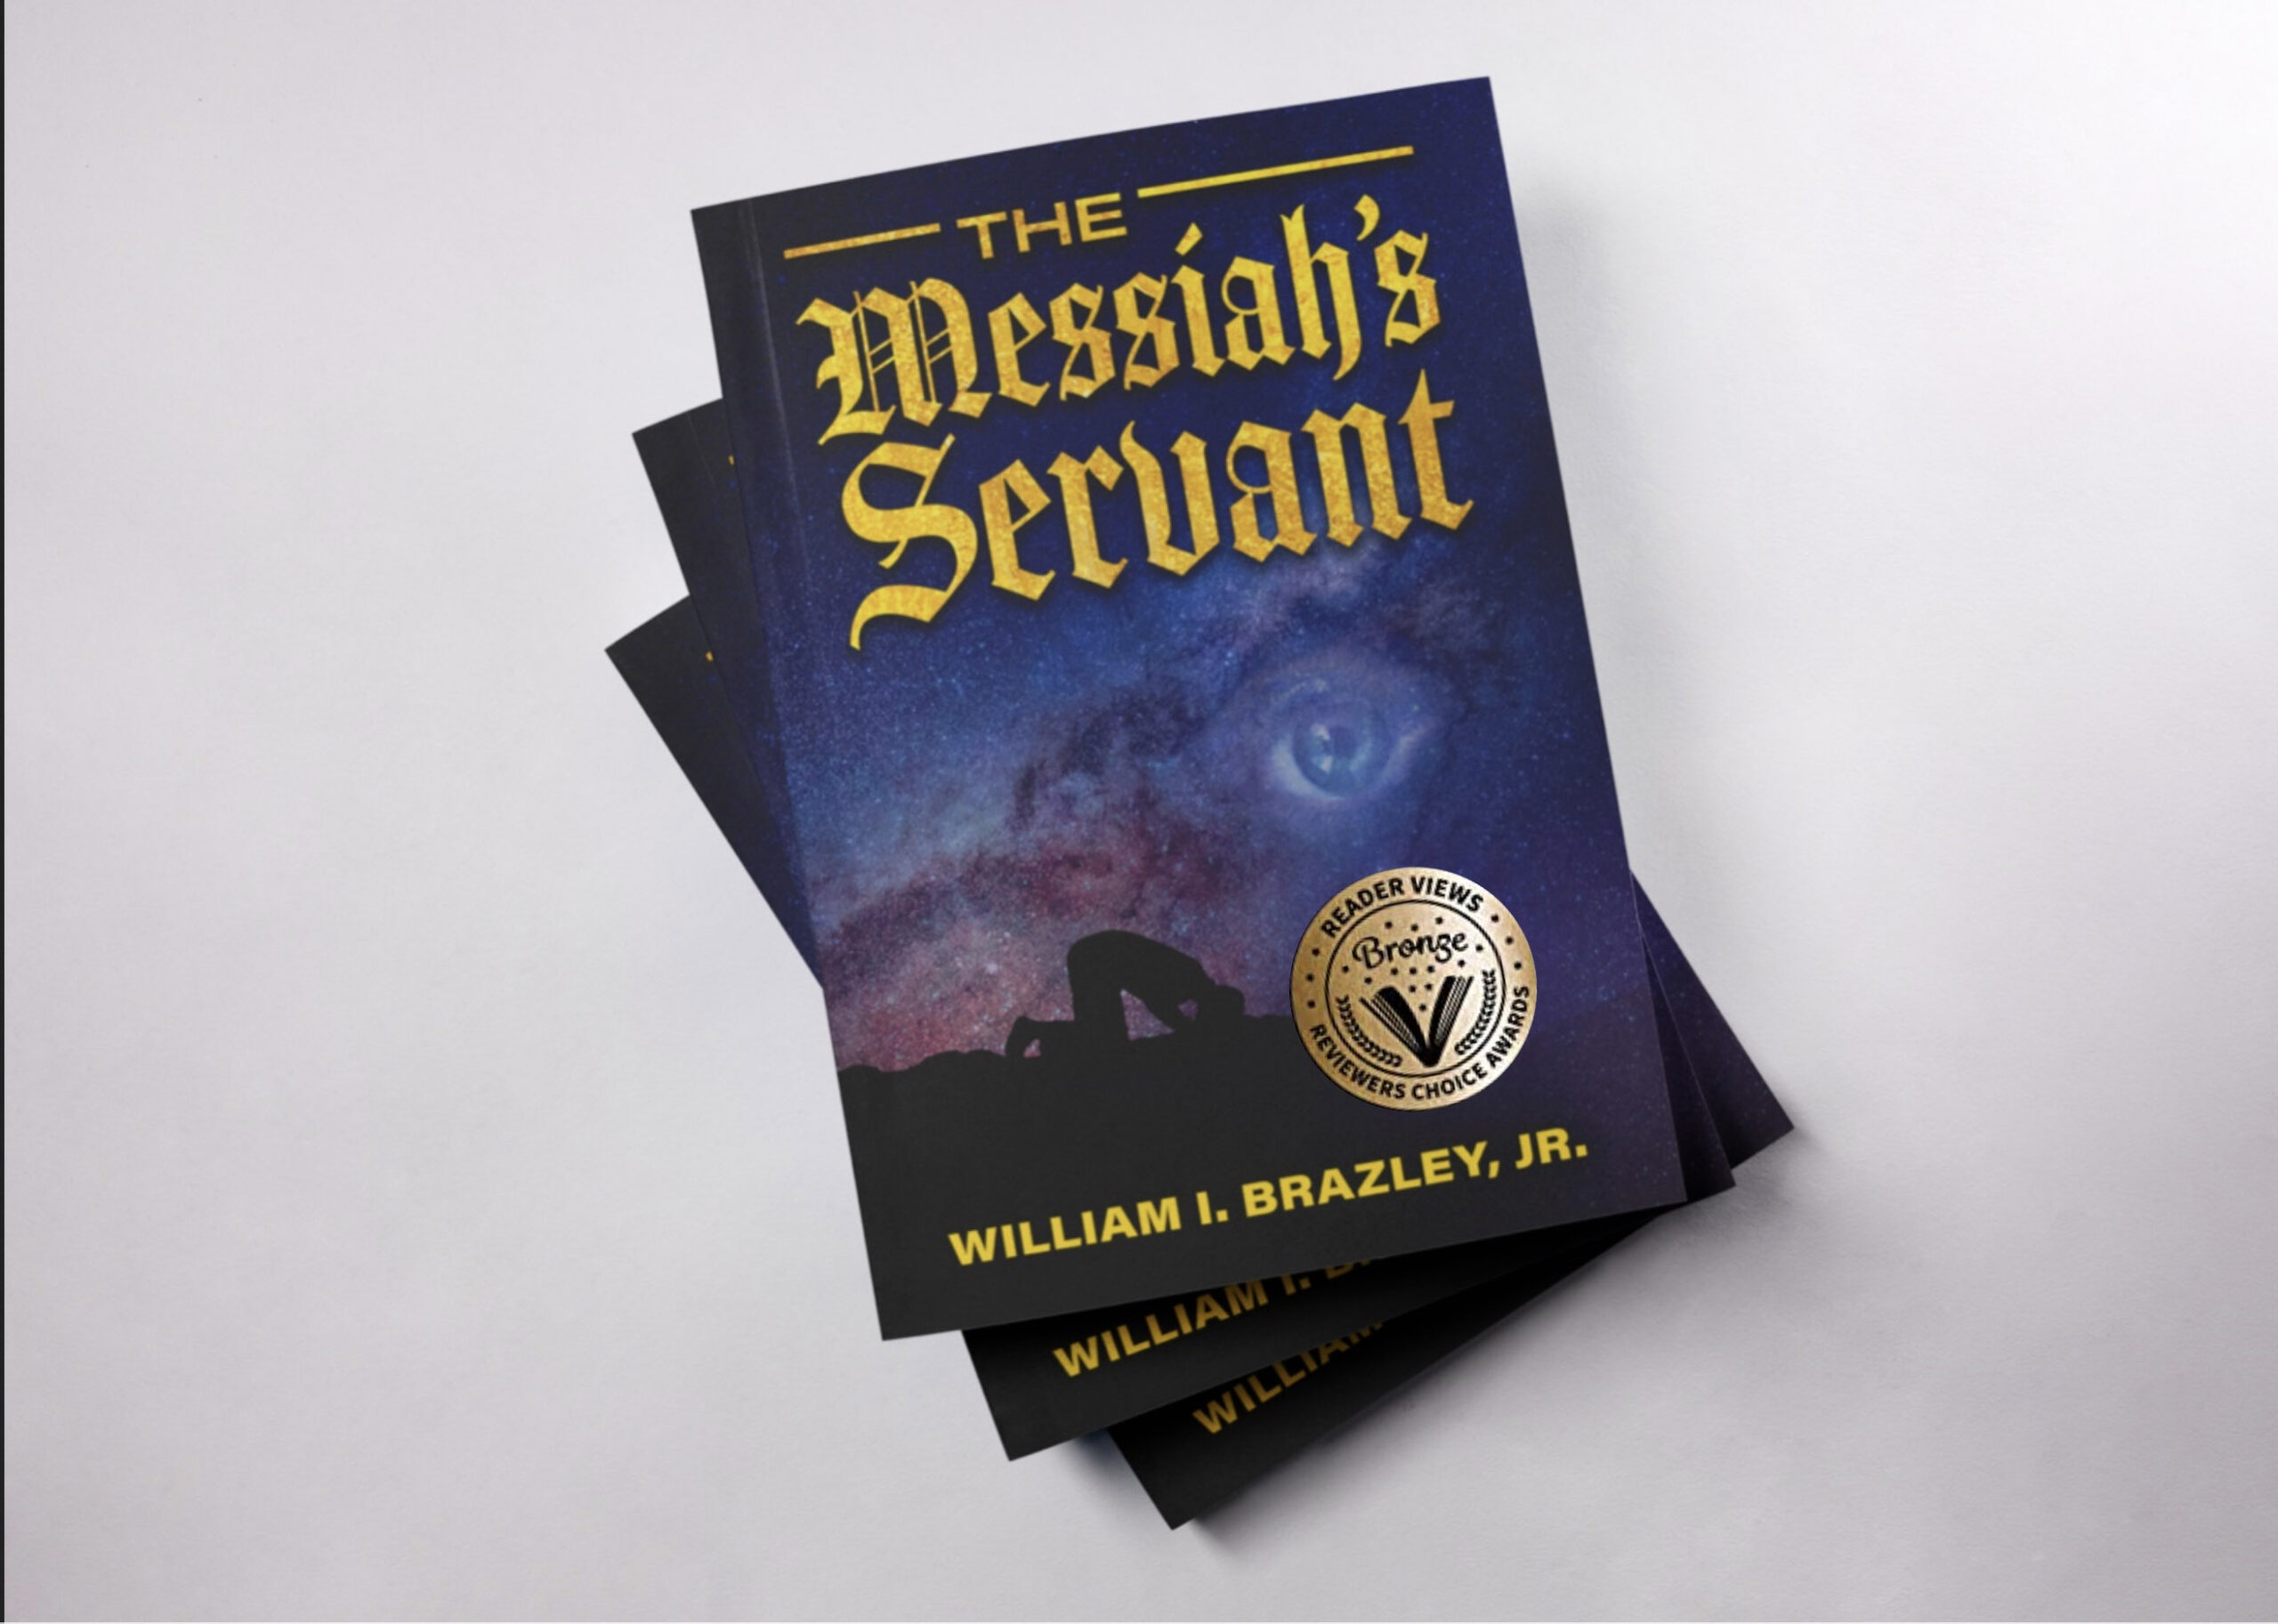 Messiah's servant award labeled book